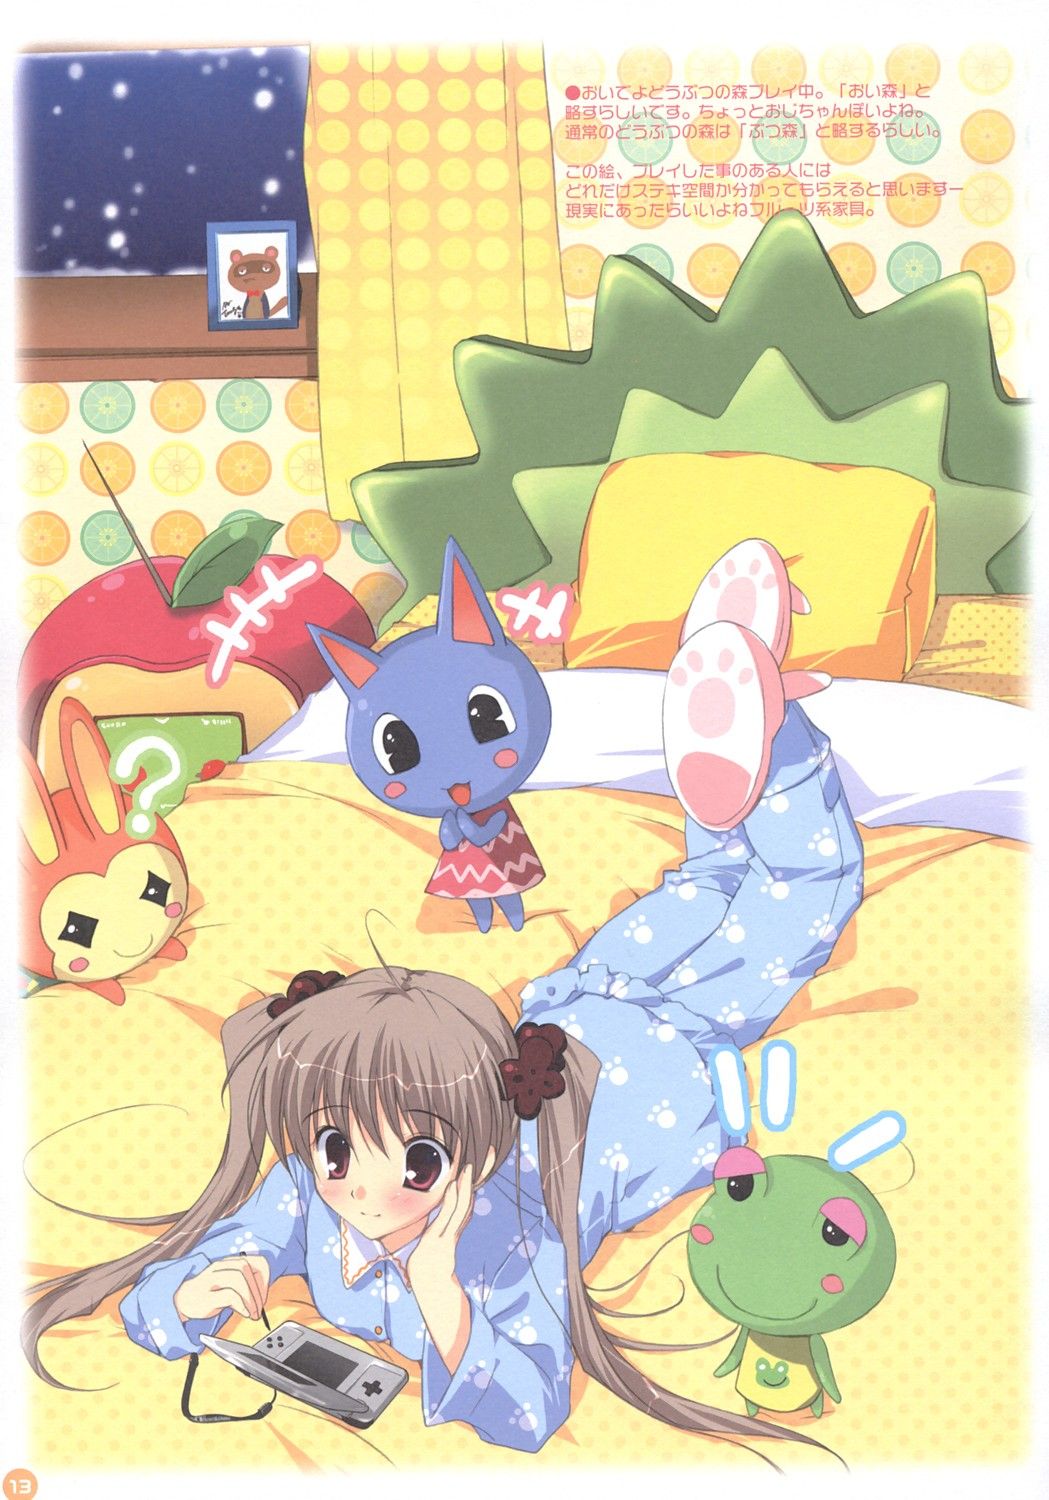 Bouquet (Doubutsu no Mori) (Rosie (animal Crossing)) Anime Image Board